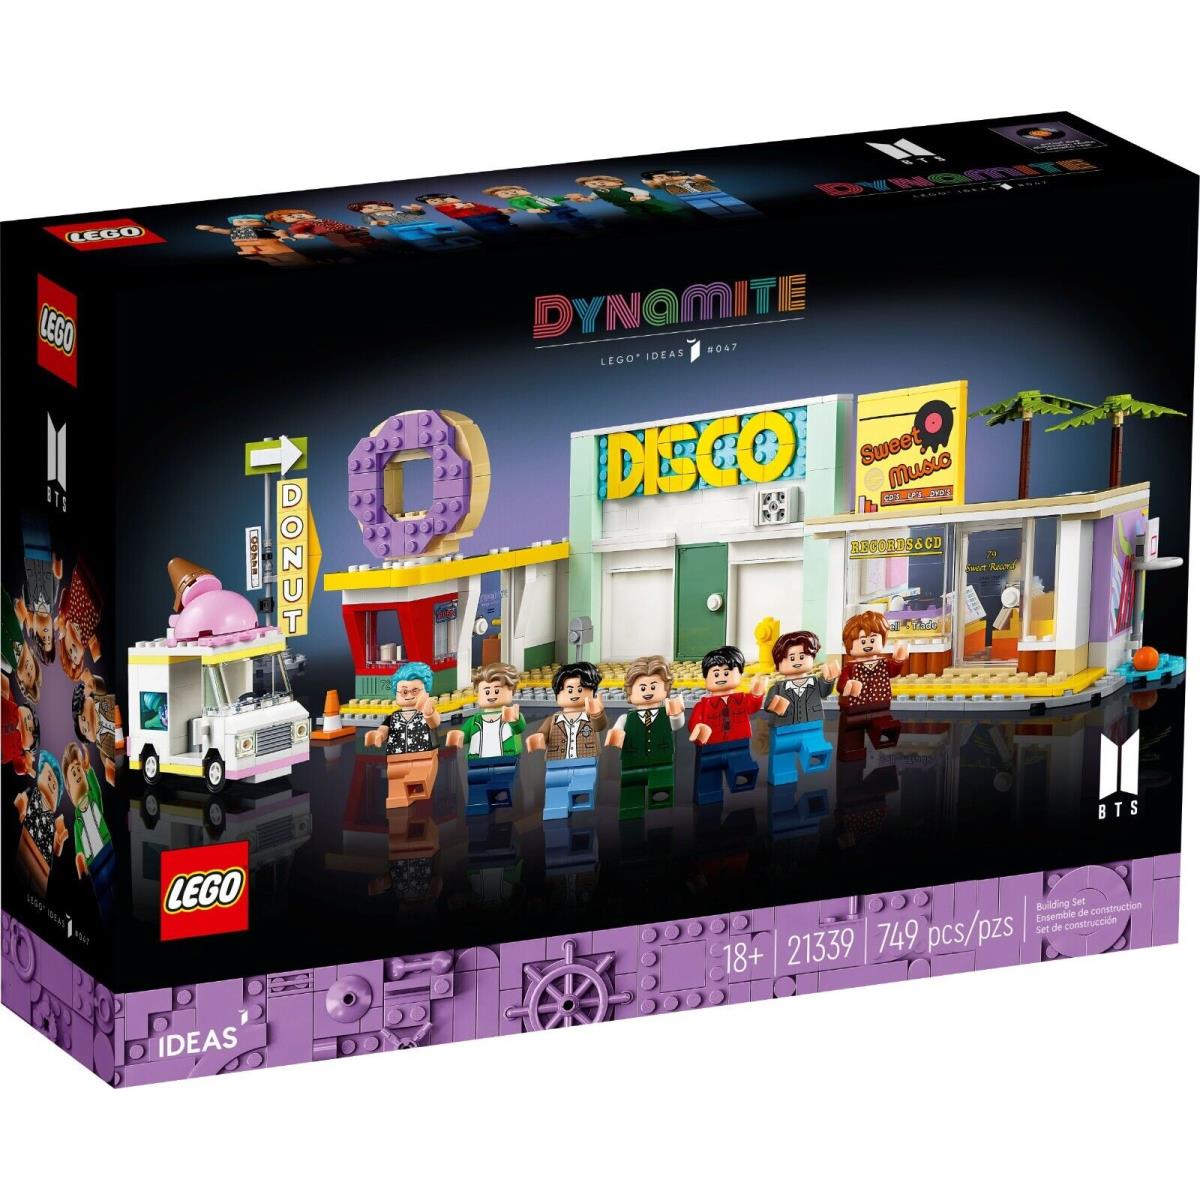 Lego 21339 Bts Dynamite Box In Hand Ready to Ship